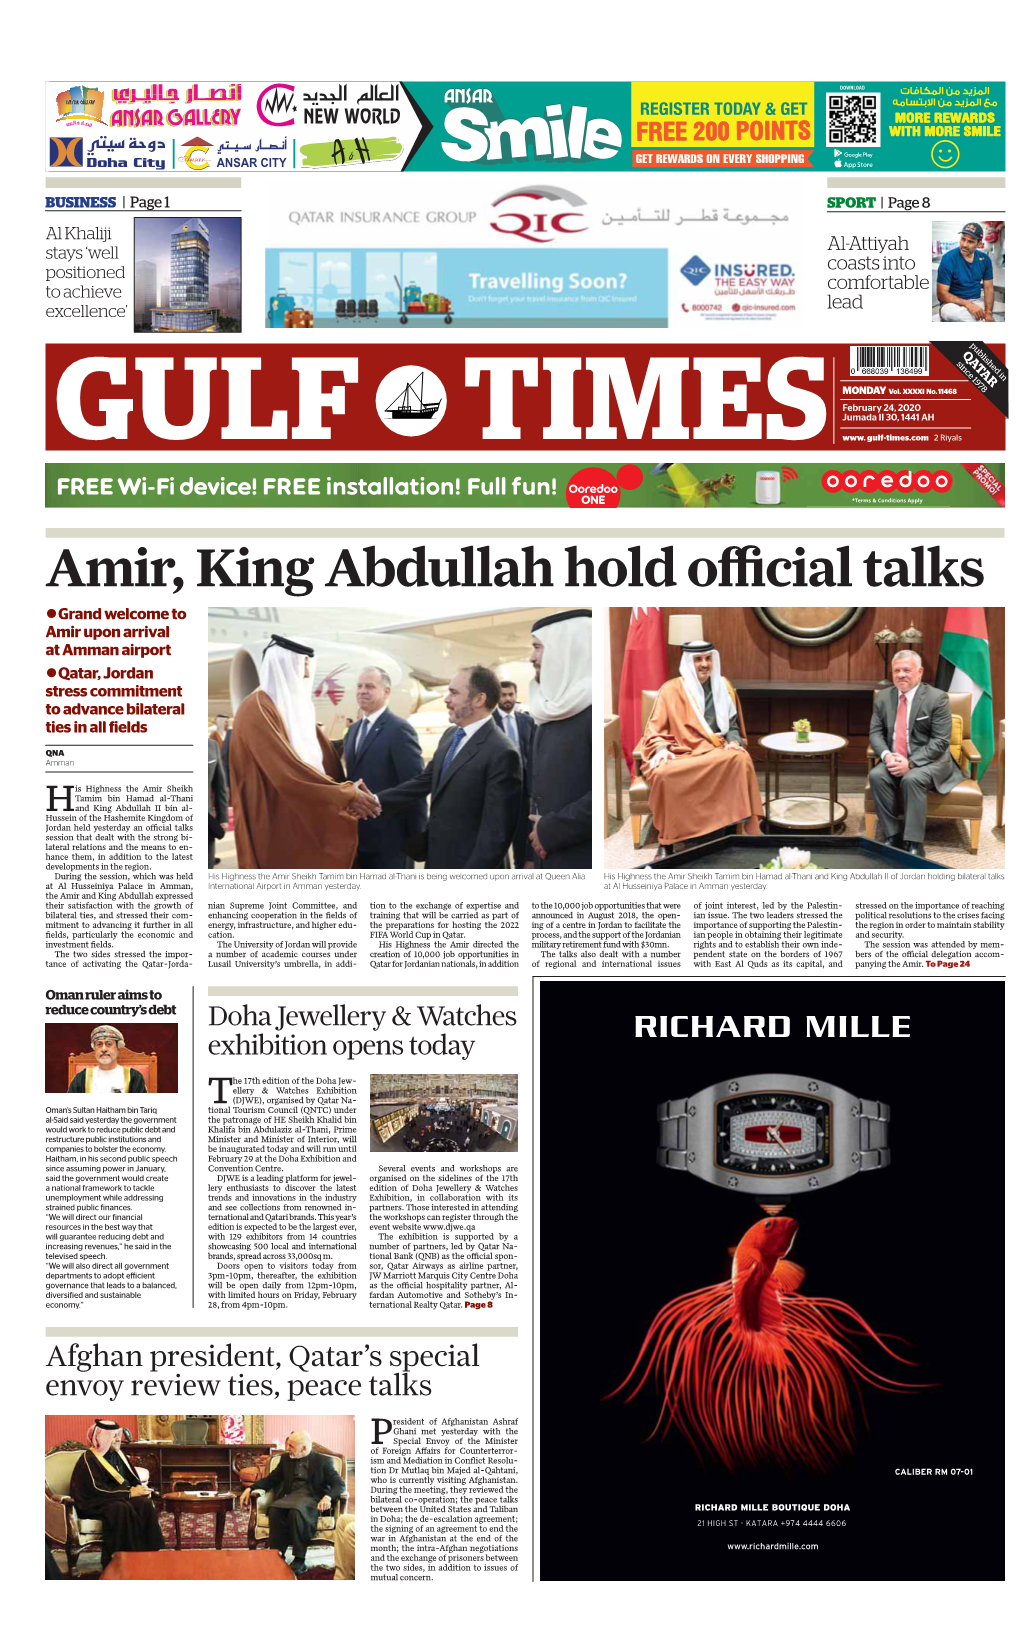 Amir, King Abdullah Hold Official Talks